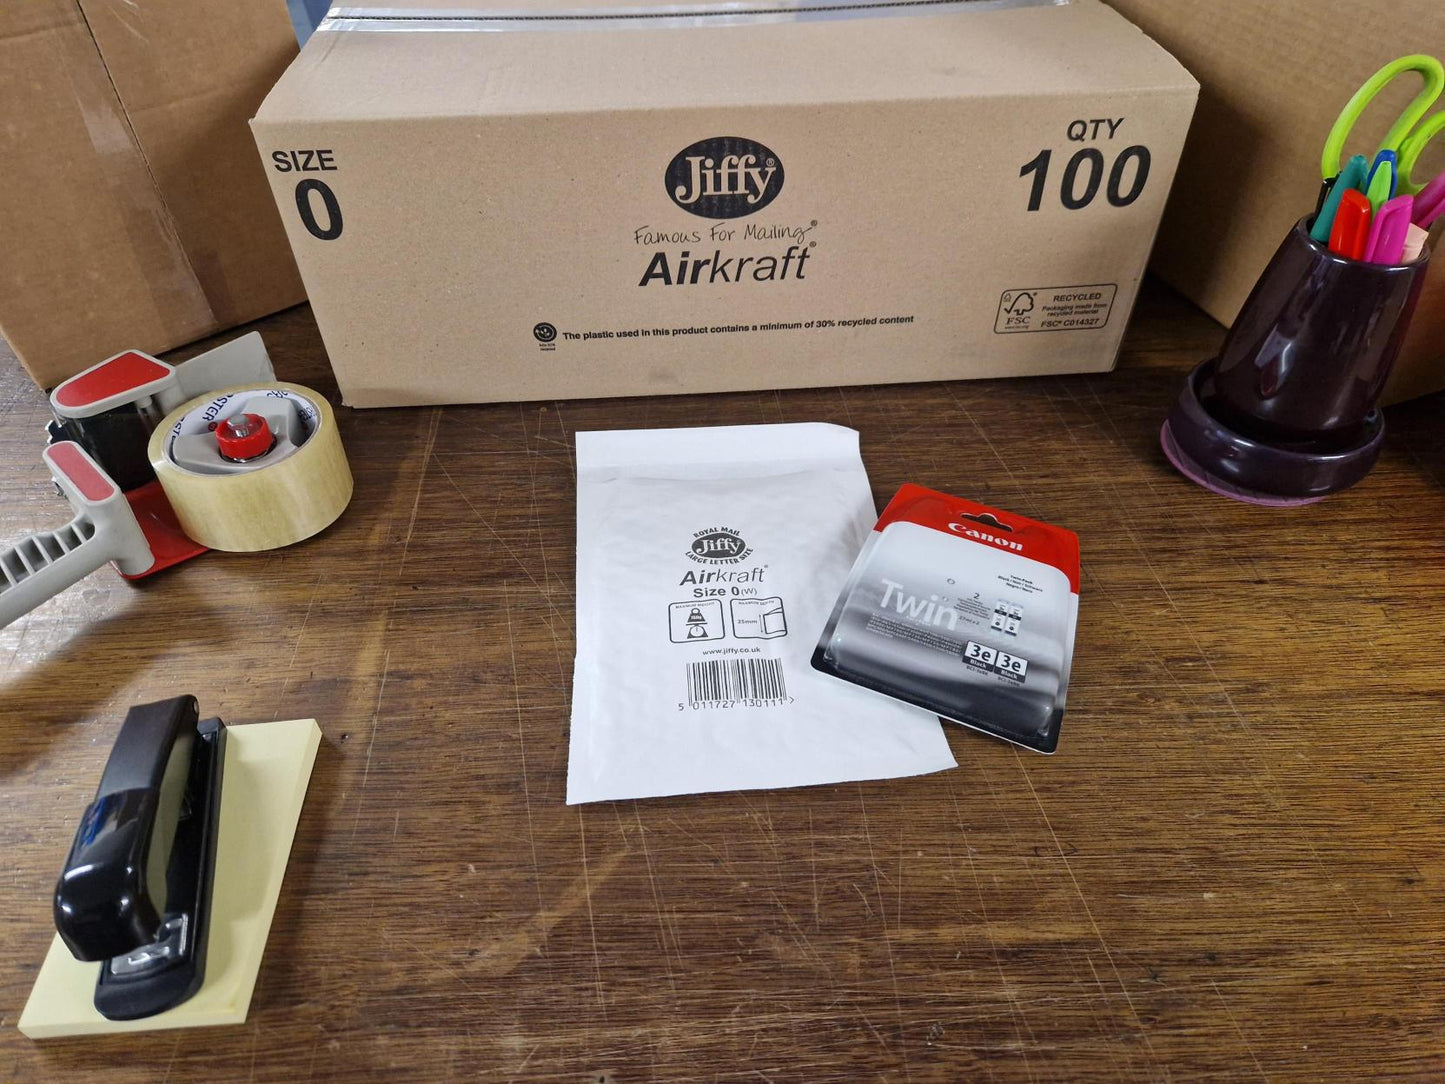 Box of Jiffy Airkraft JL0 - 170mm x 210mm (100 envelopes)